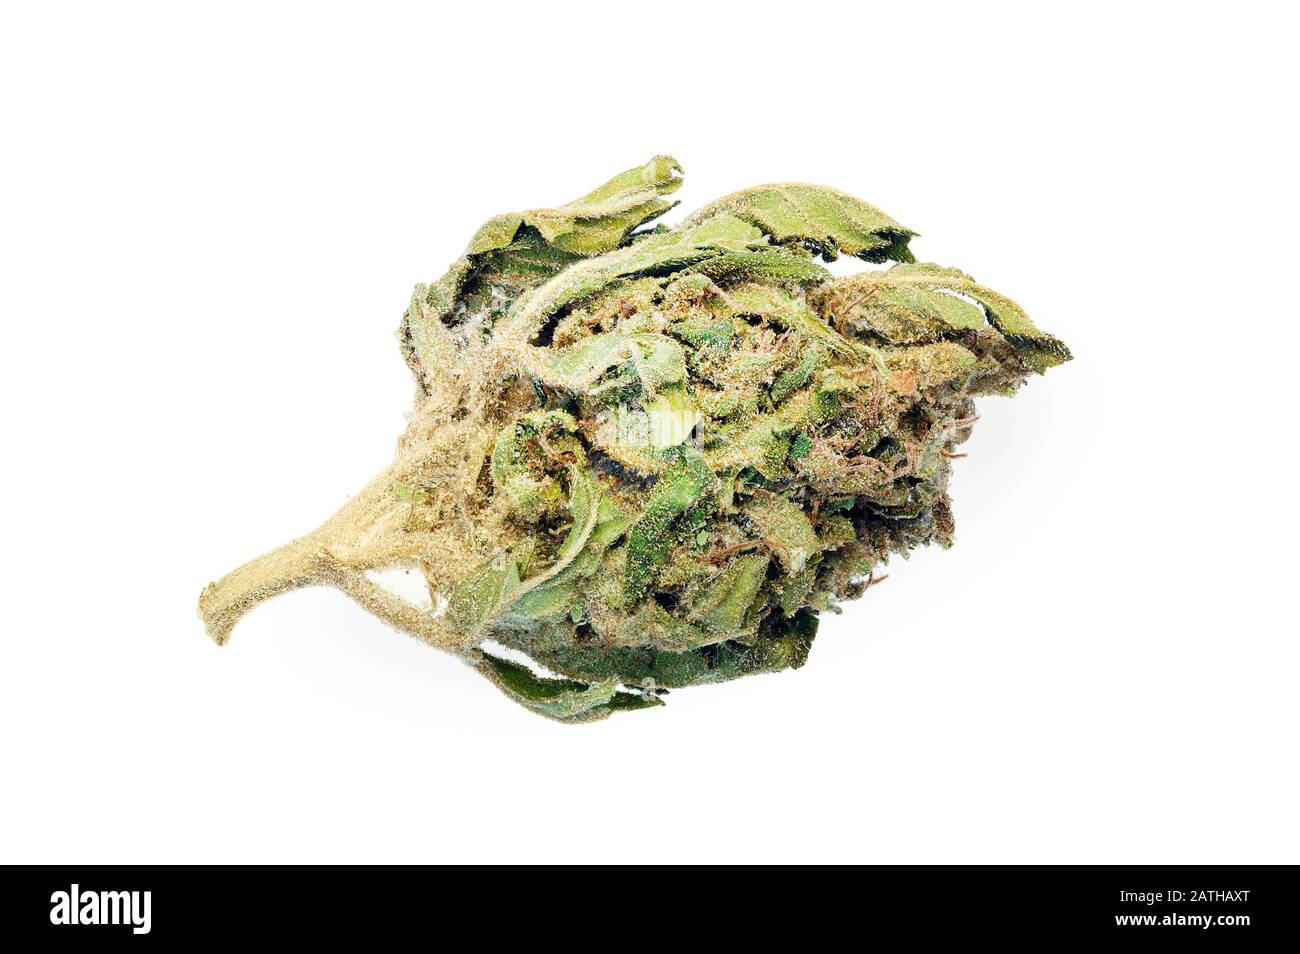 Close up of prescription medical marijuana and recreational weed hybrid strain sticky flower bud. Stock Photo